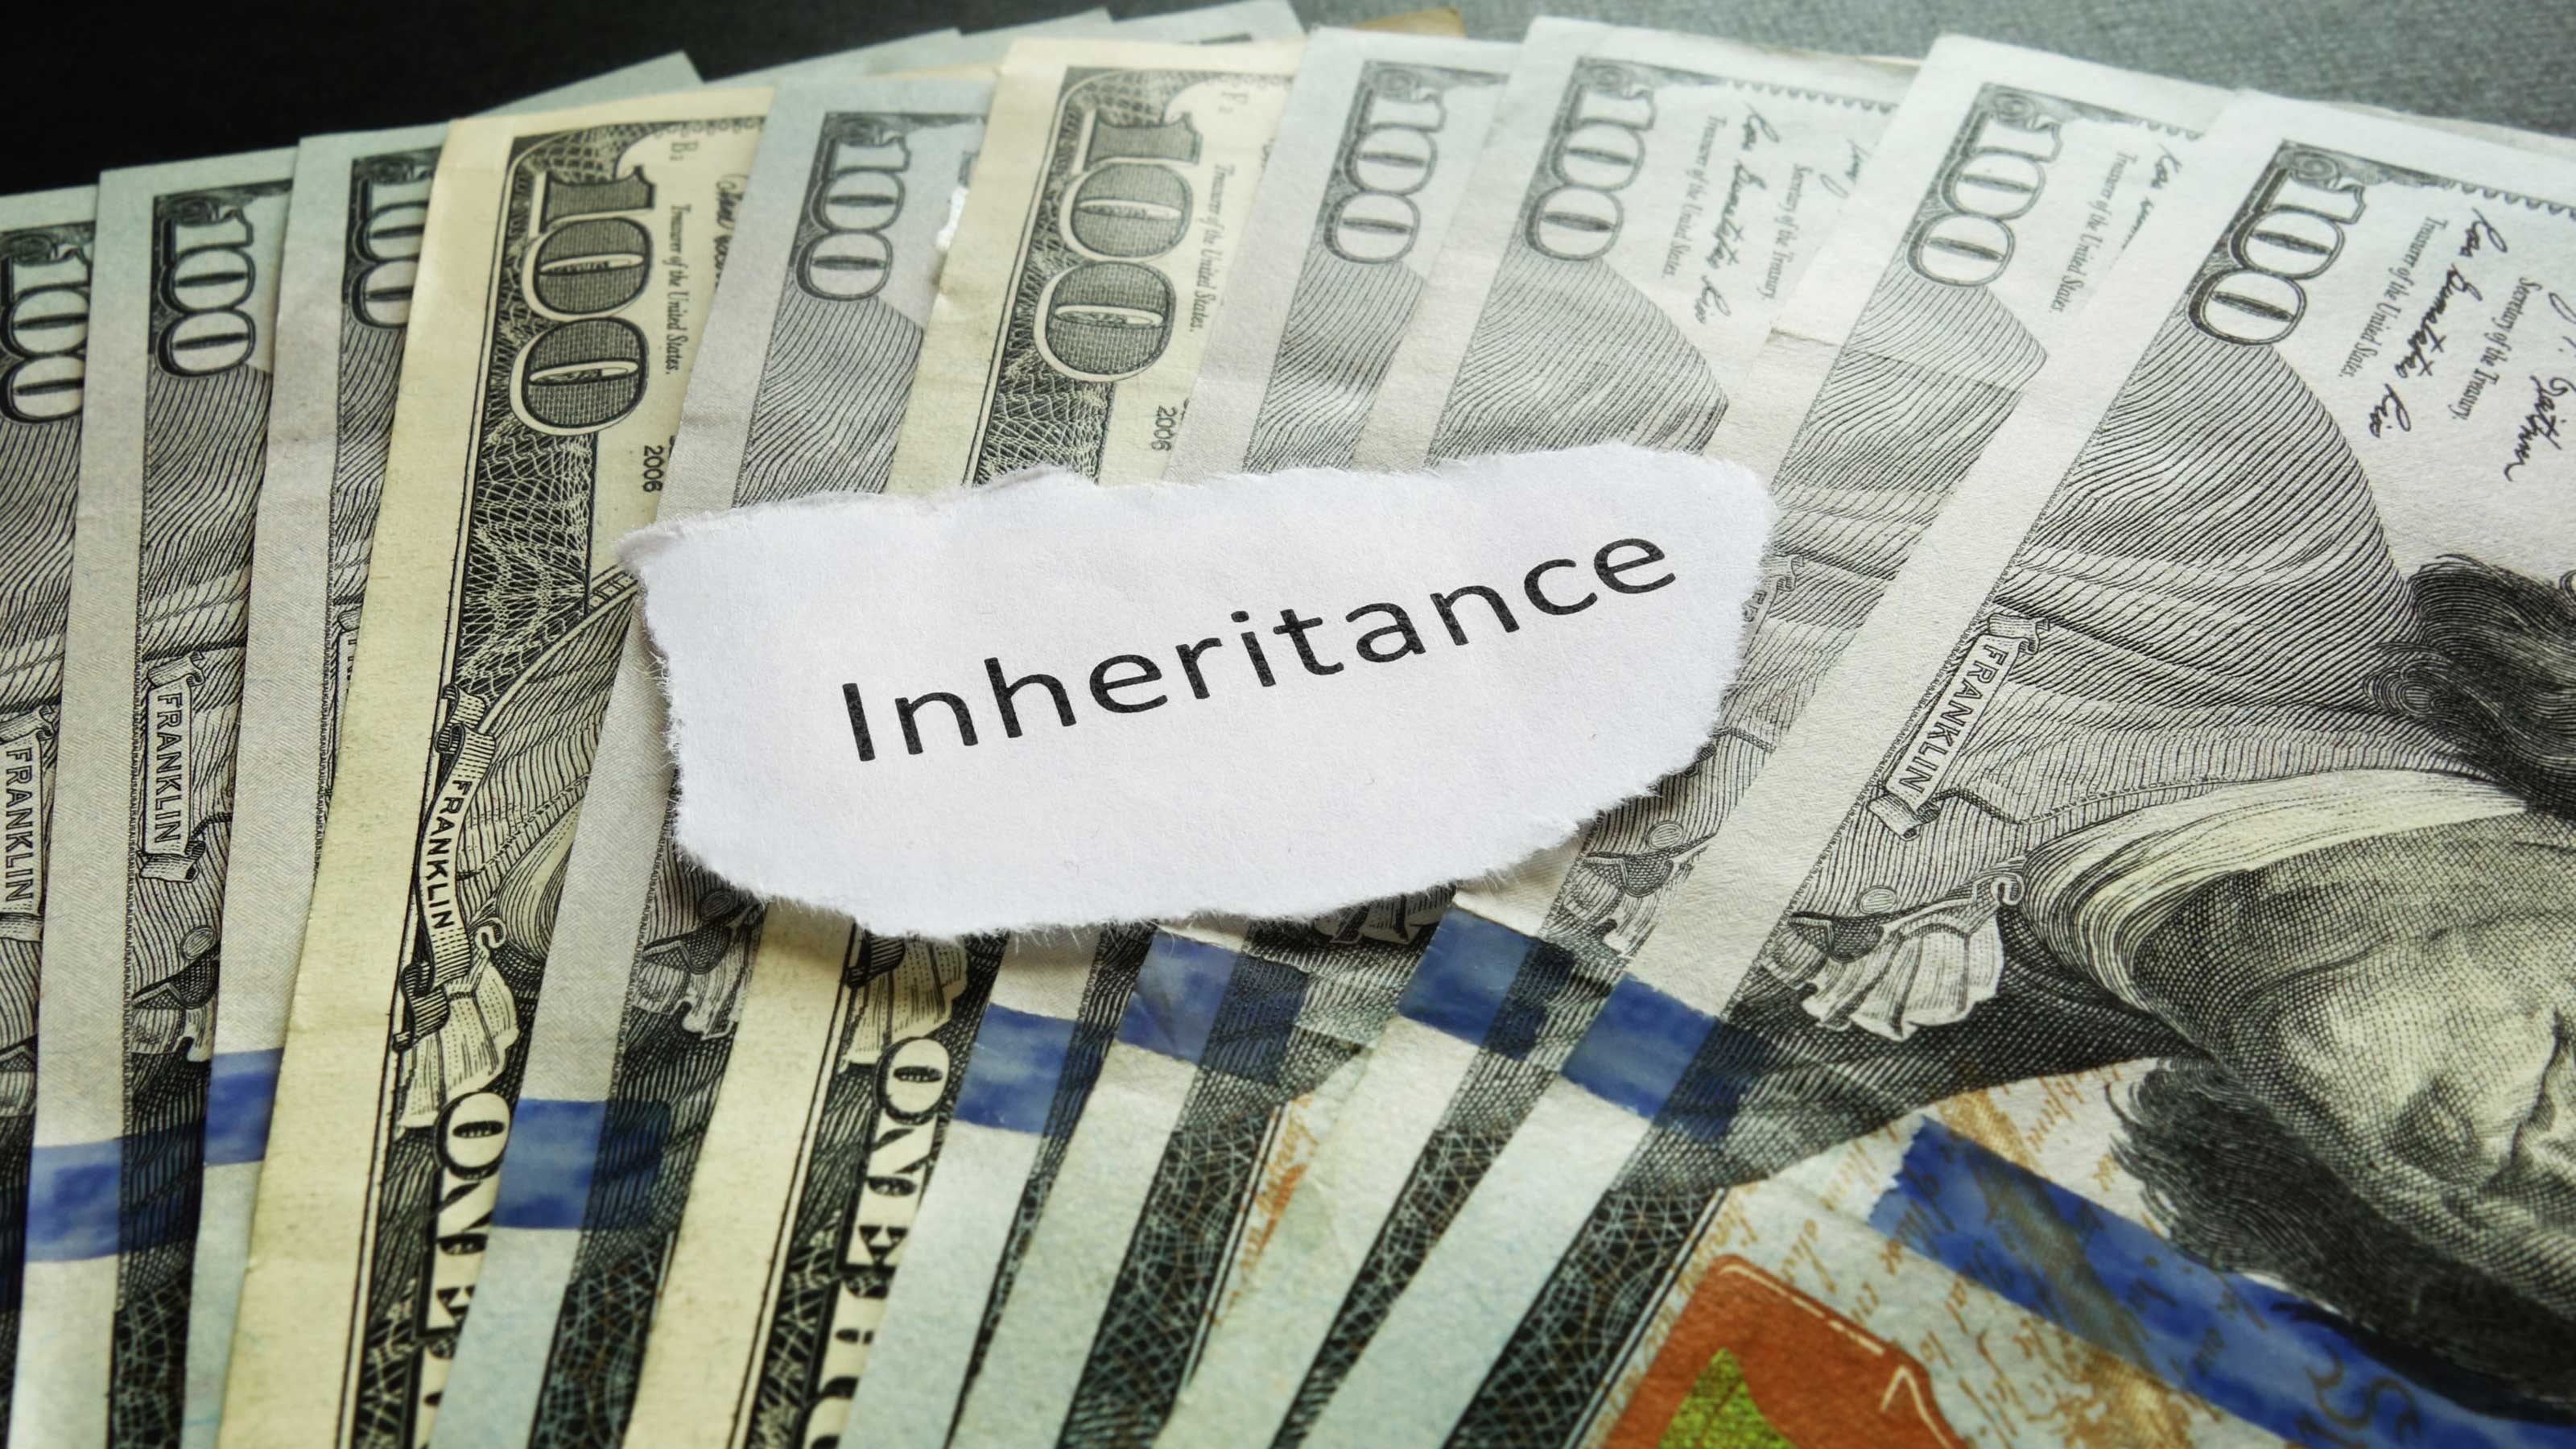 Inheritance - Inheritance